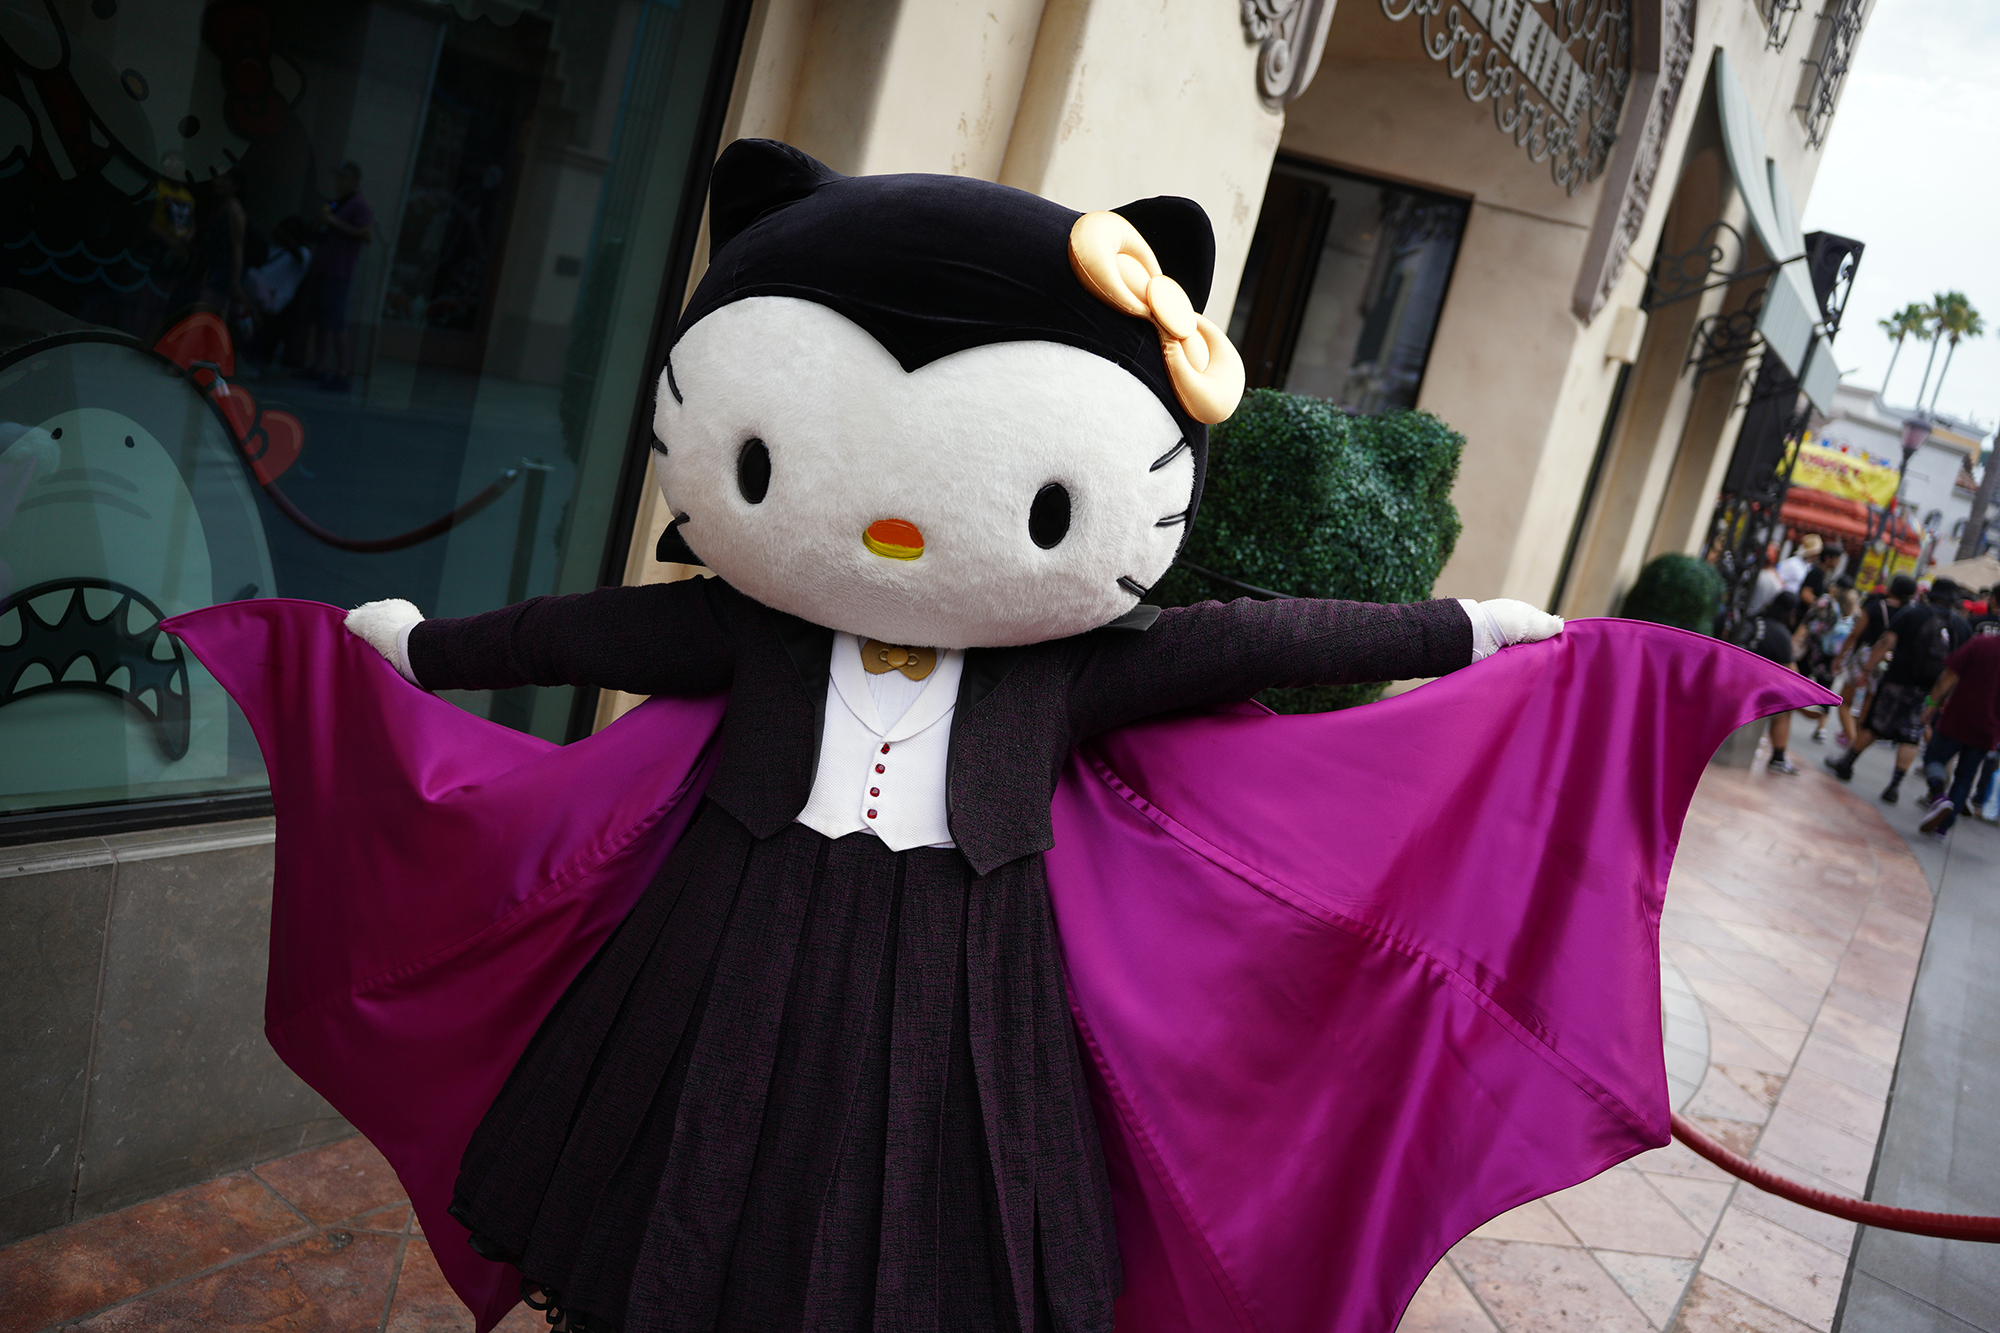 Hello Vampire Kitty returns to meet guests during Halloween season